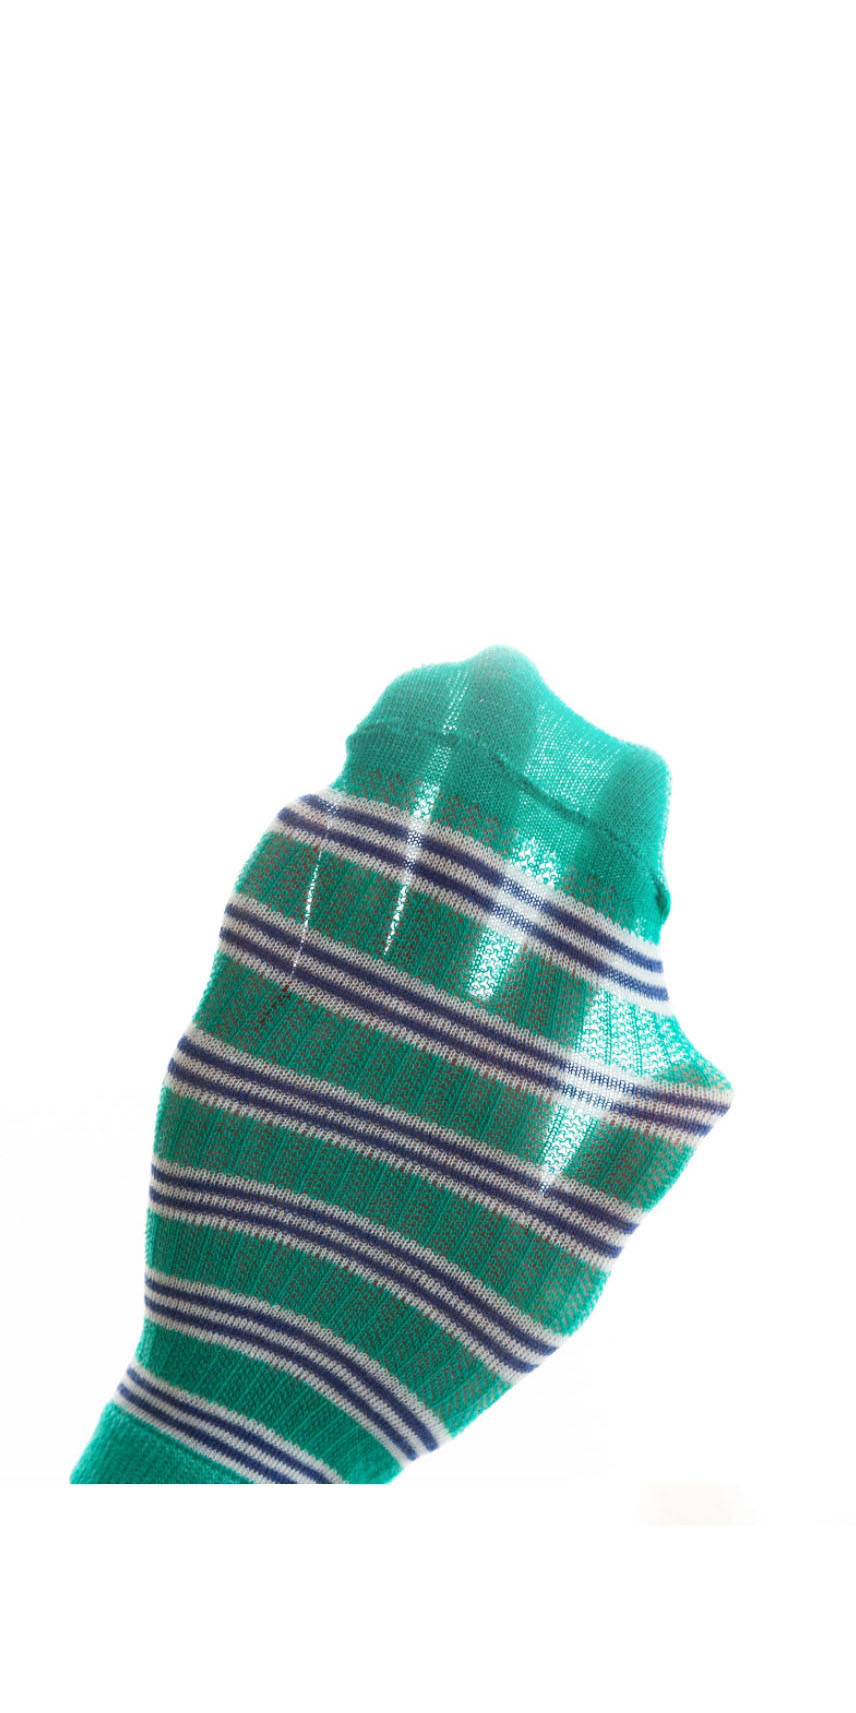 Fashion Cool Boy [5 Pairs Of Breathable Mesh] Cotton Printed Breathable Mesh Kids Socks,Fashion Socks